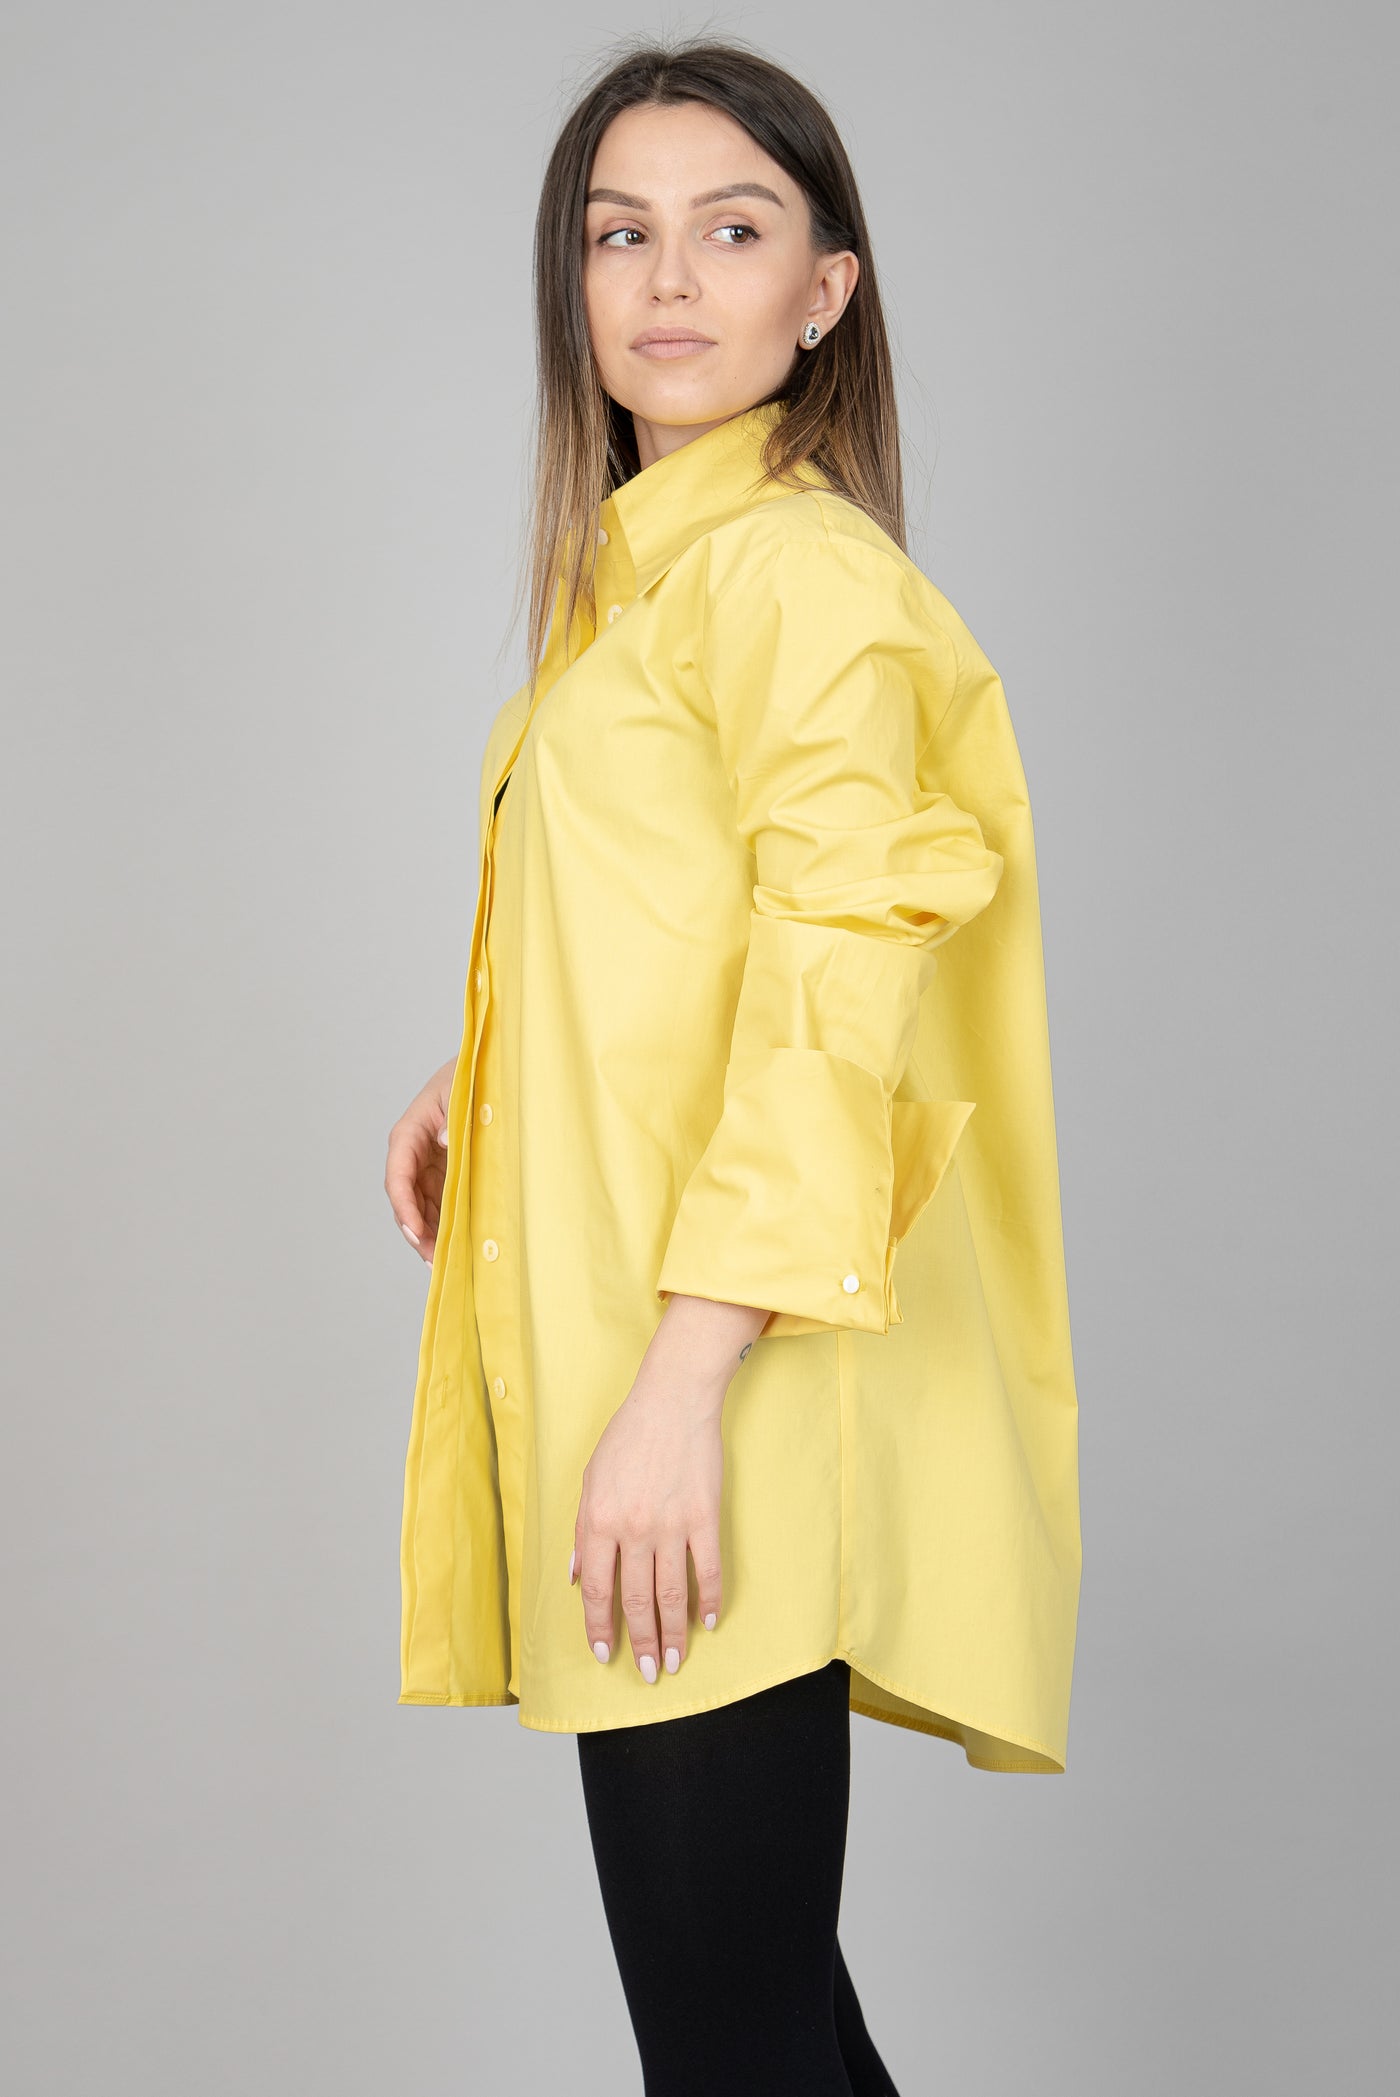 Yellow elegant formal shirt F2292